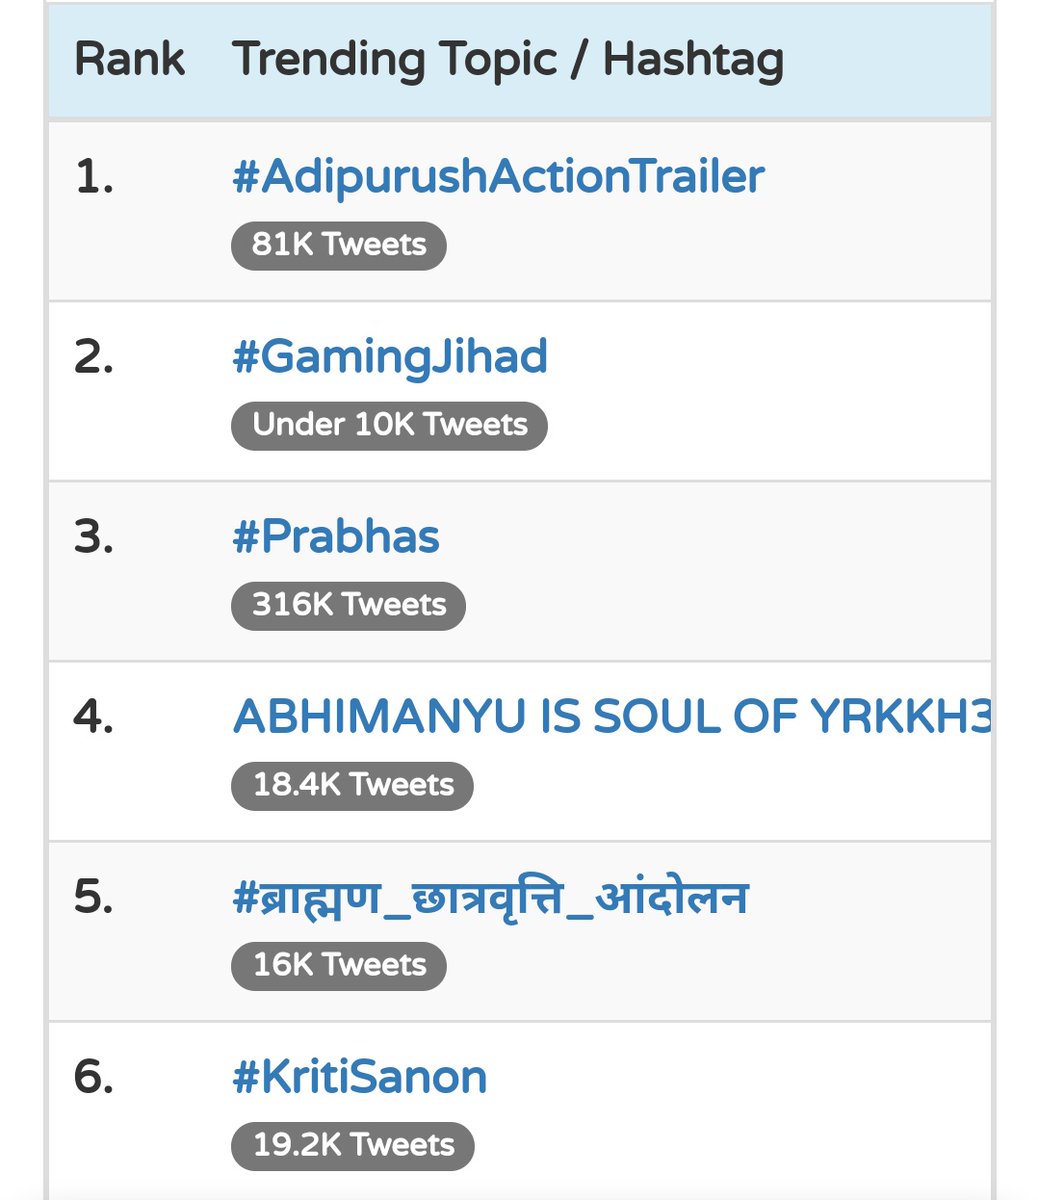 ABHIMANYU IS SOUL OF YRKKH3 

bring back OG Abhimanyu 

Justice for Abhimanyu Trending at 4 with 18.4k tweets💥

@StarPlus @zamahabib @KalraRomesh

#yrkkh #AbhimanyuBirla 
#HarshadChopda

ABHIMANYU IS SOUL OF YRKKH3